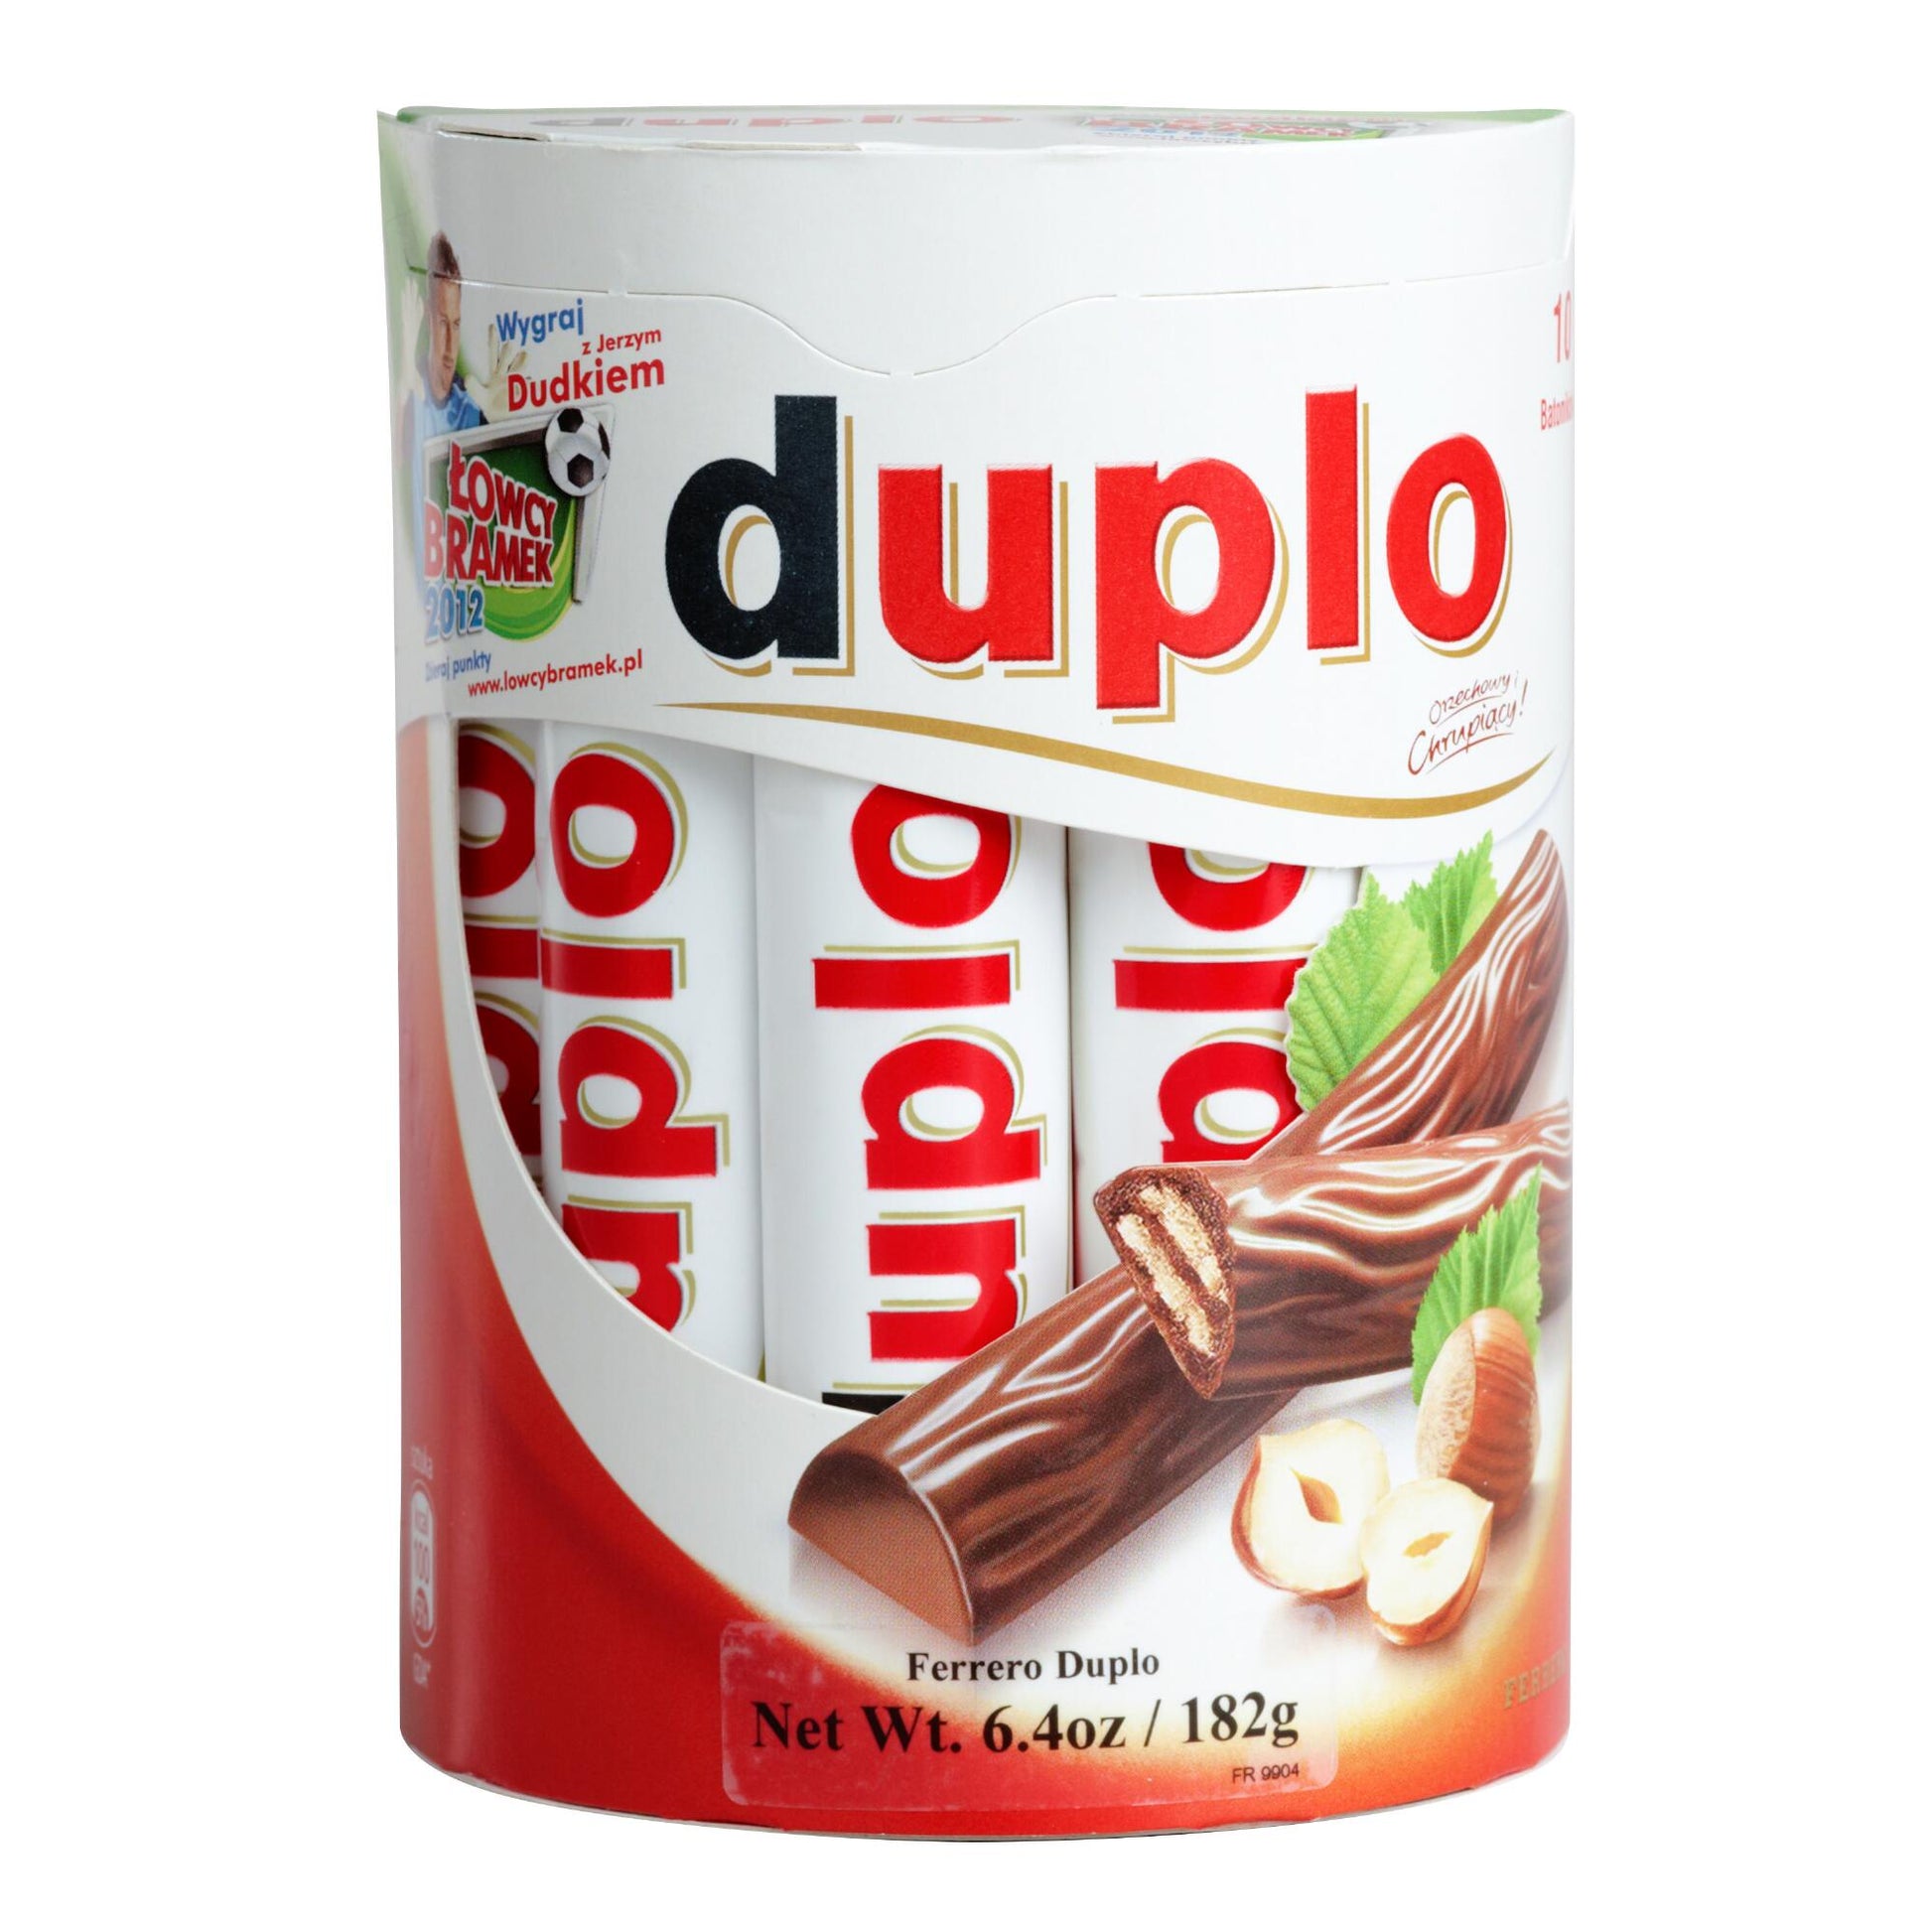 Ferrero Duplo Bars, 10 Pack LLC Candy Shop German –